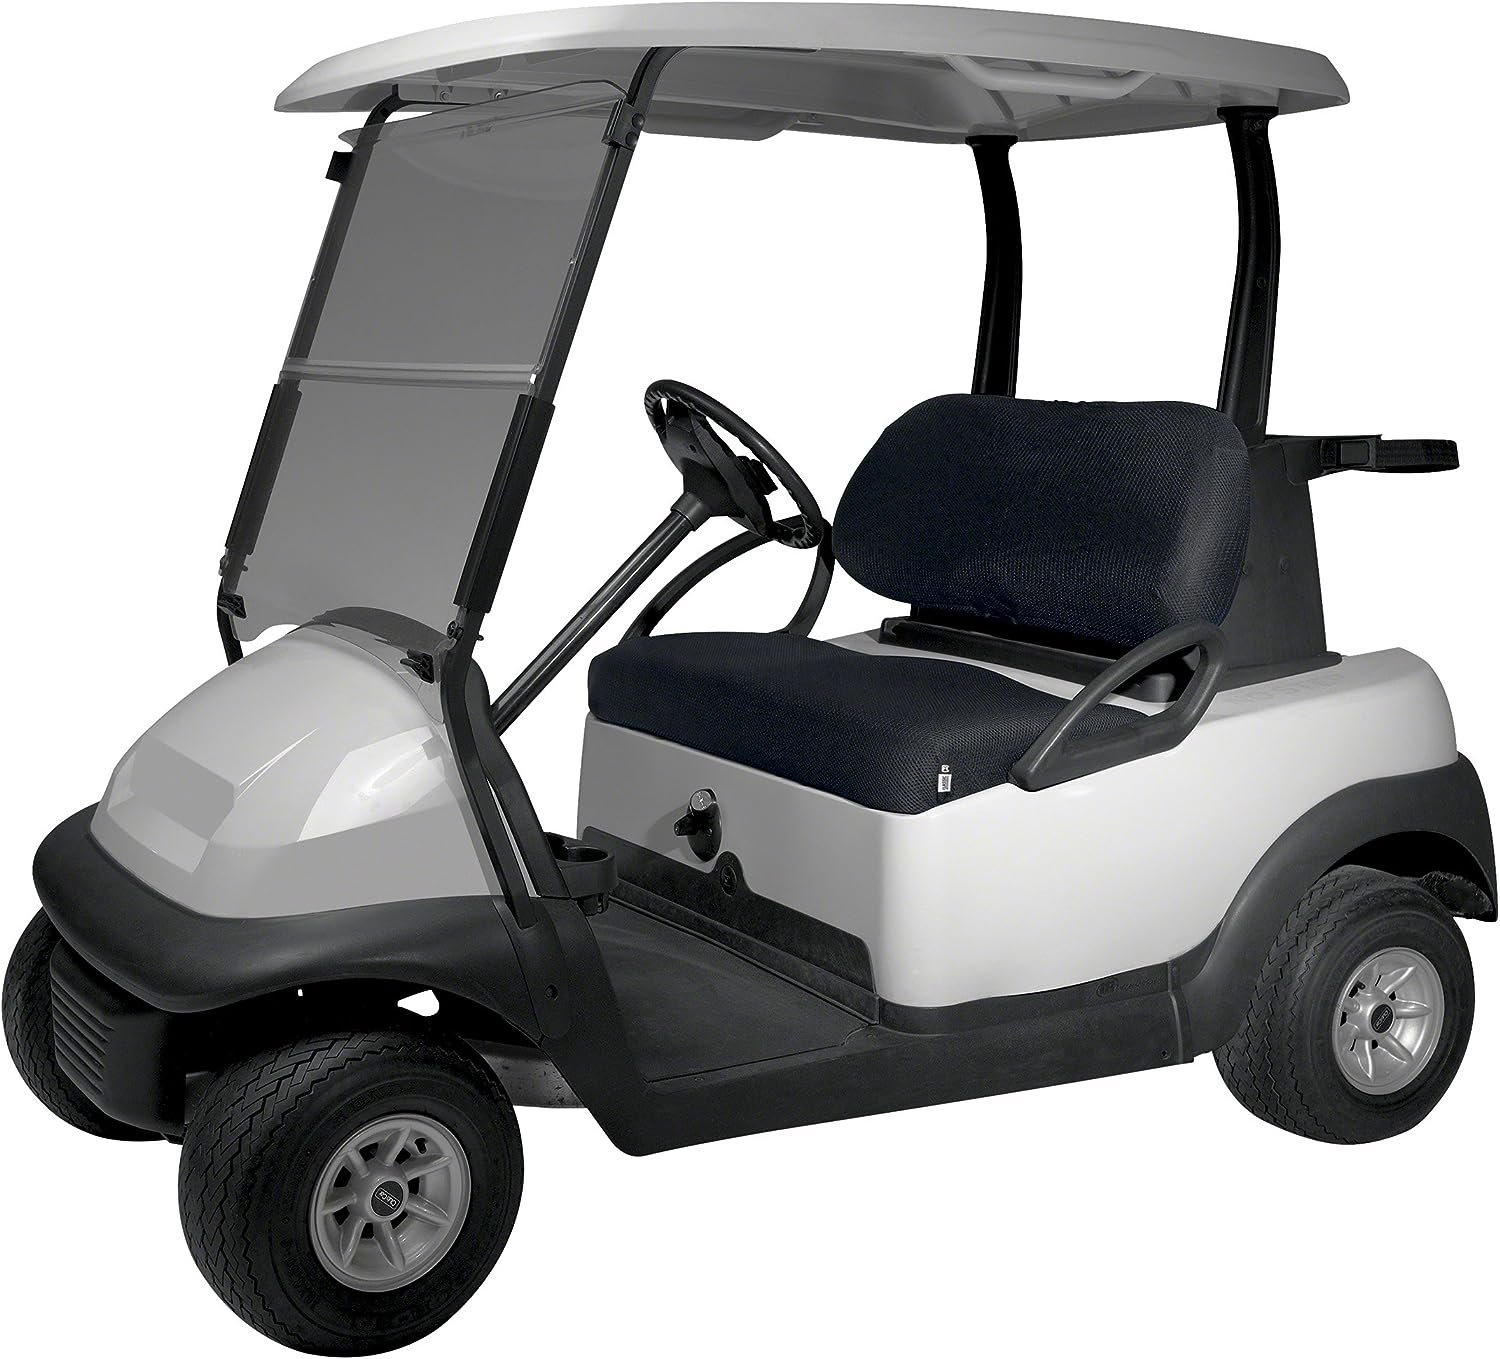 Classic Accessories Fairway Golf Cart Diamond Air Mesh Bench Seat Cover